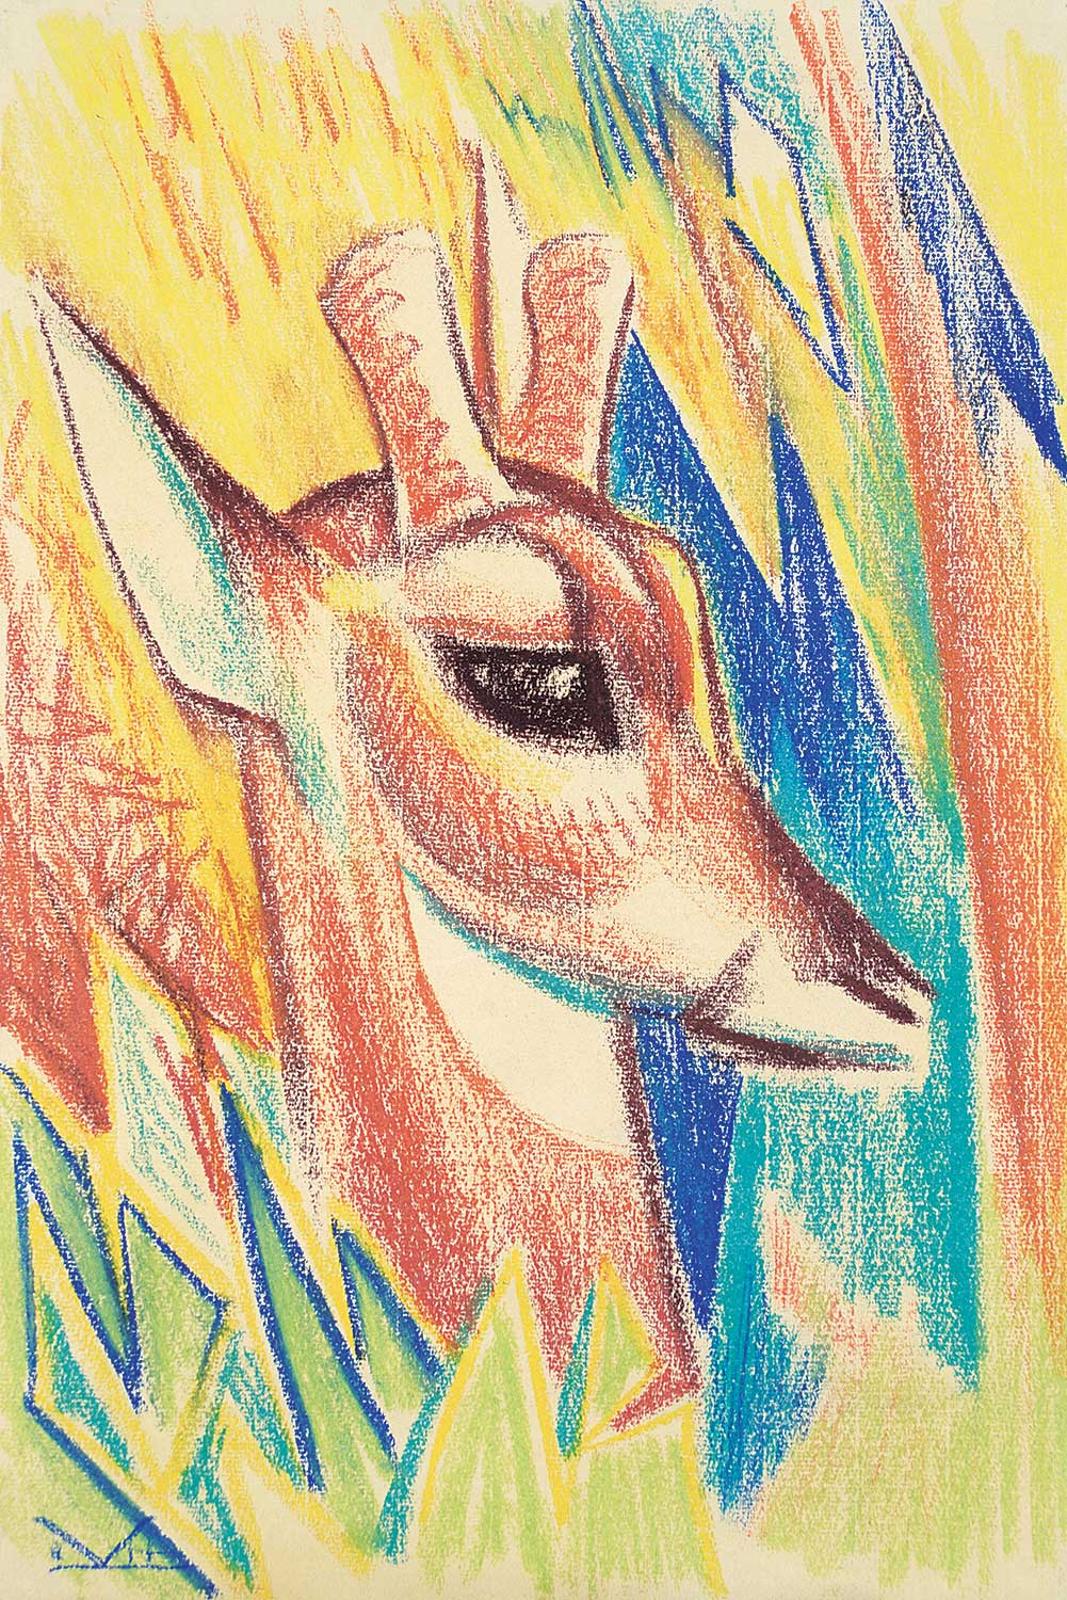 Illingworth Holey (Buck) Kerr (1905-1989) - Untitled - Antelope